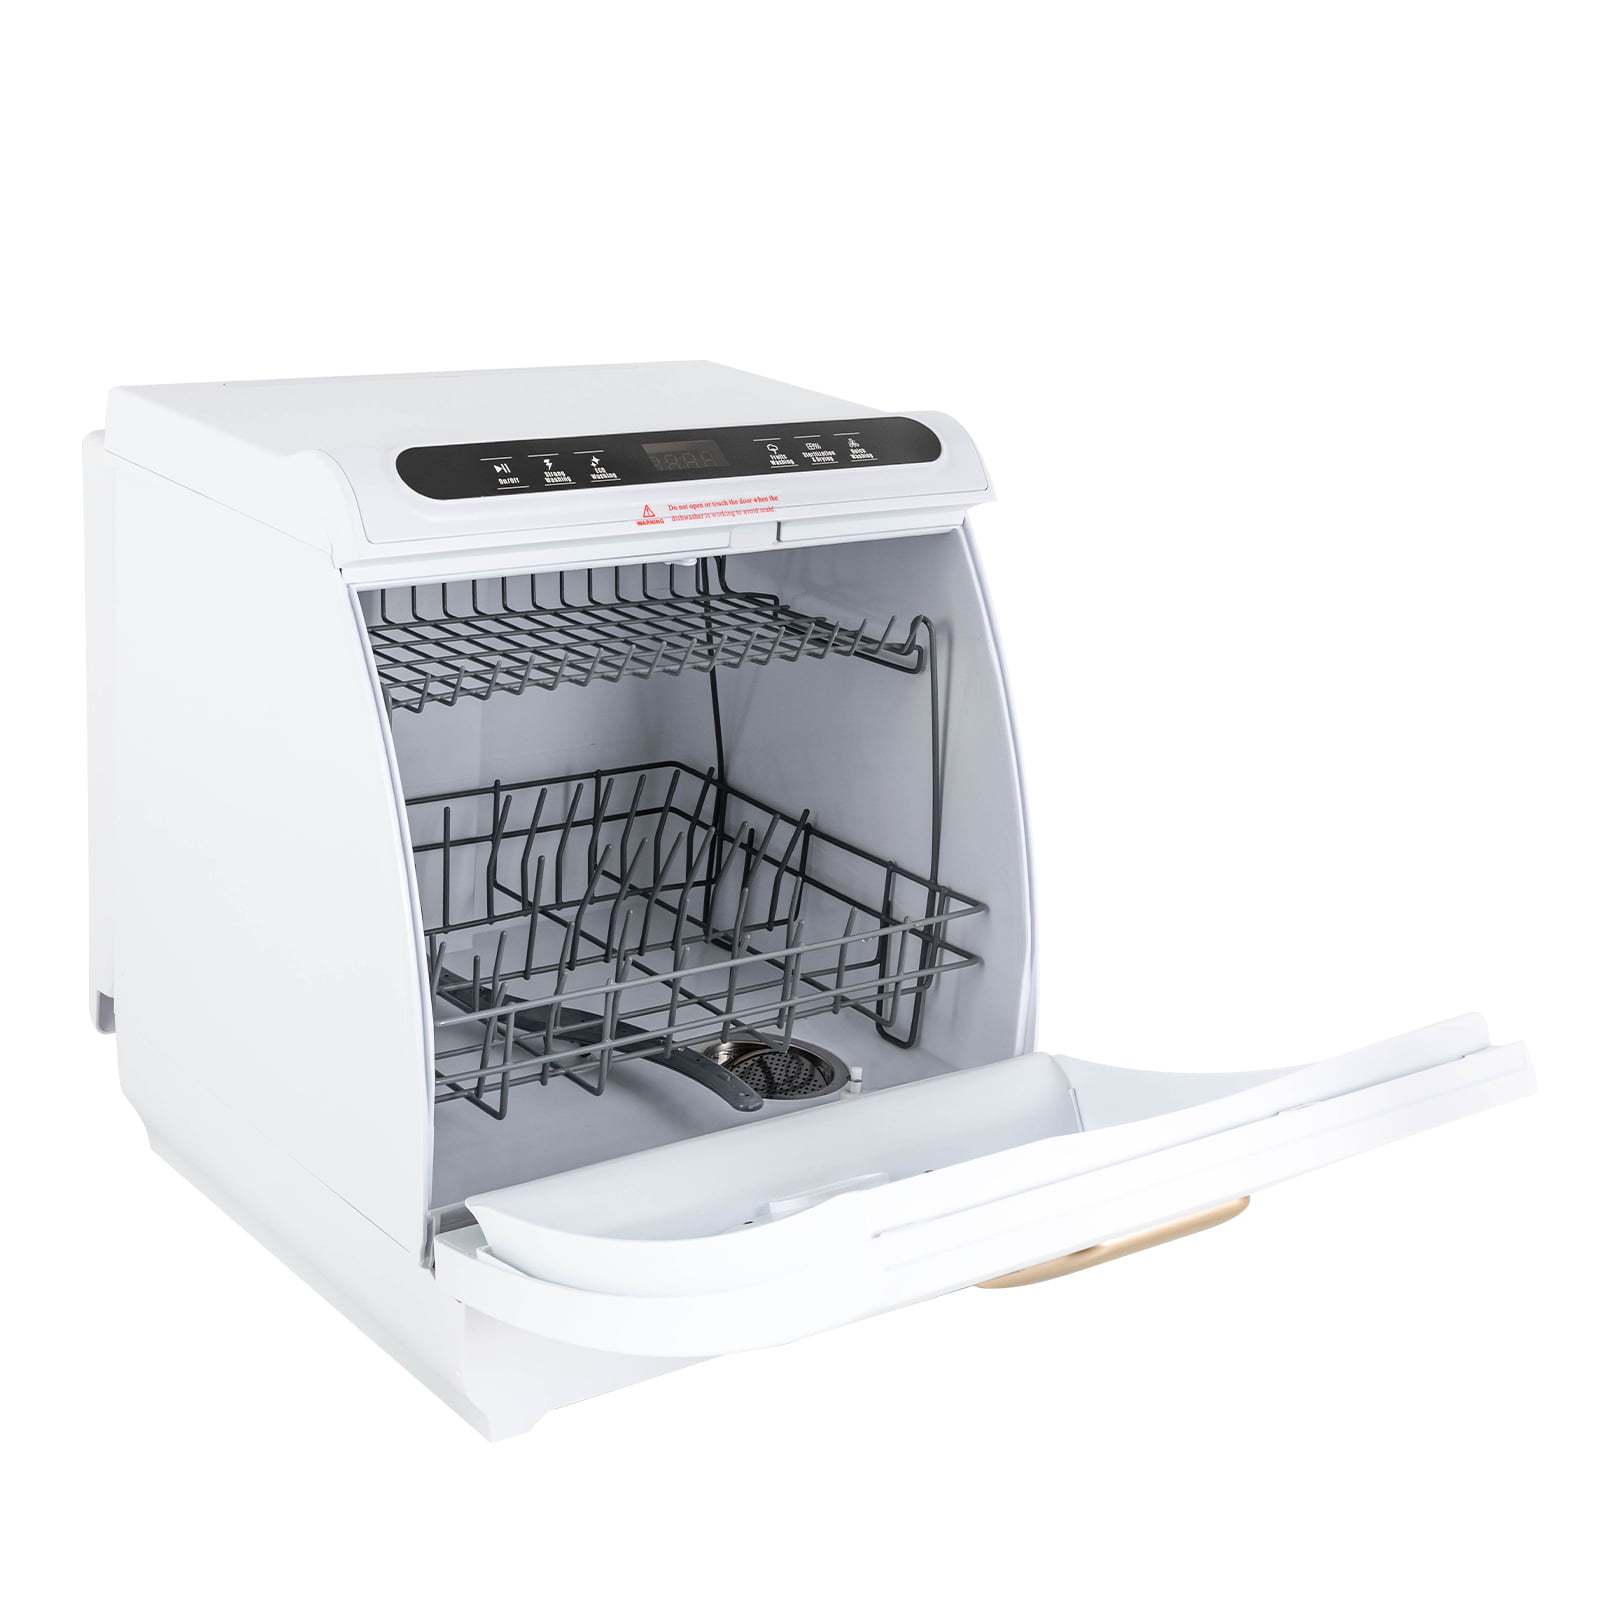 Portable Dishwasher Countertop, No Hookup Needed, 7 Programs, PTC Air-Dry,  Anti-Leakage, Fruit & Vegetable